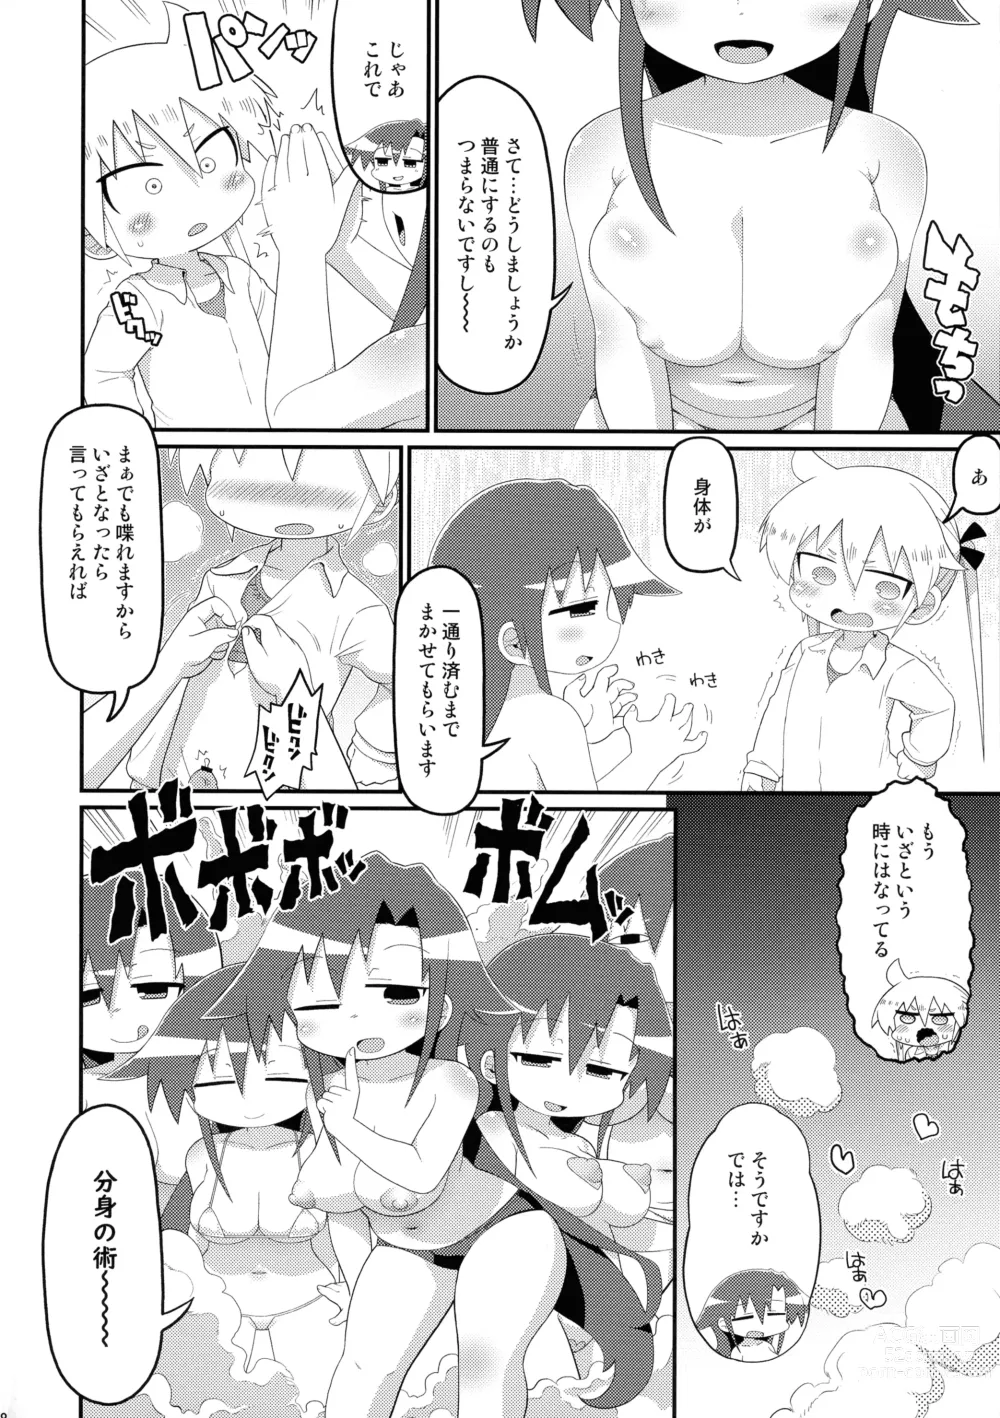 Page 8 of doujinshi Hekoheko Sonya to Chichideka Agiri